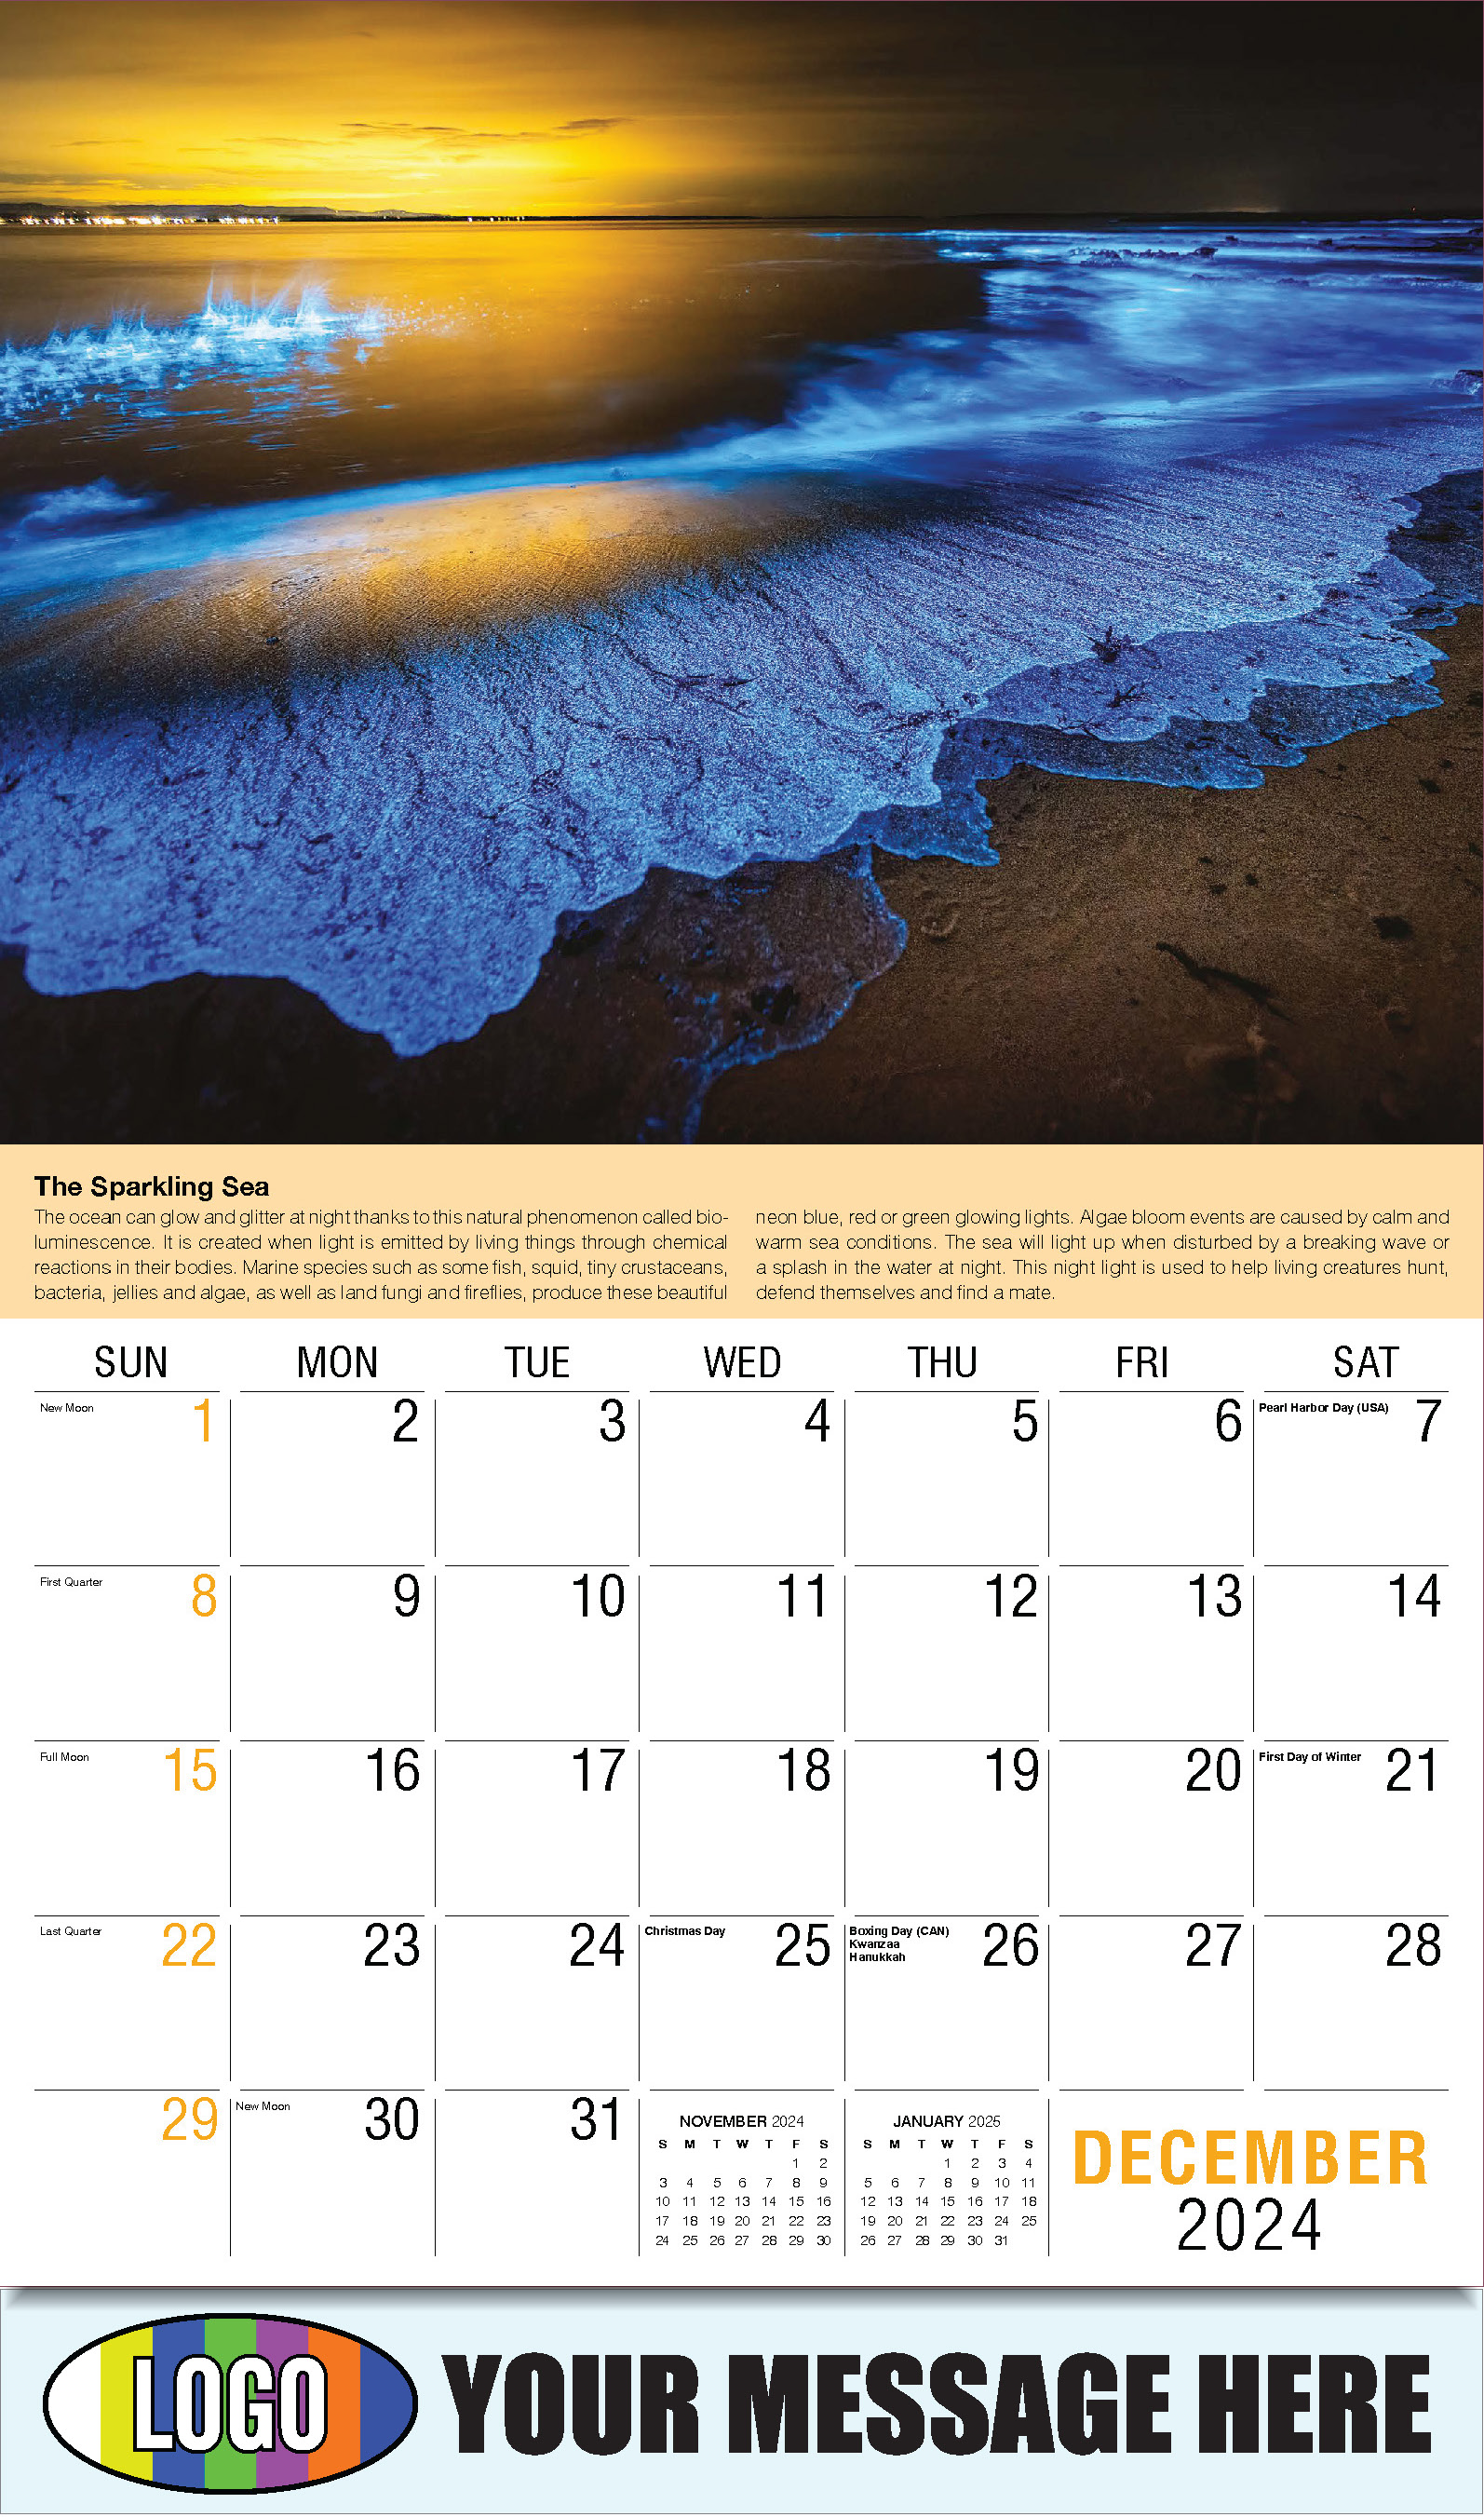 Planet Earth 2025 Business Promotional Wall Calendar - December_a